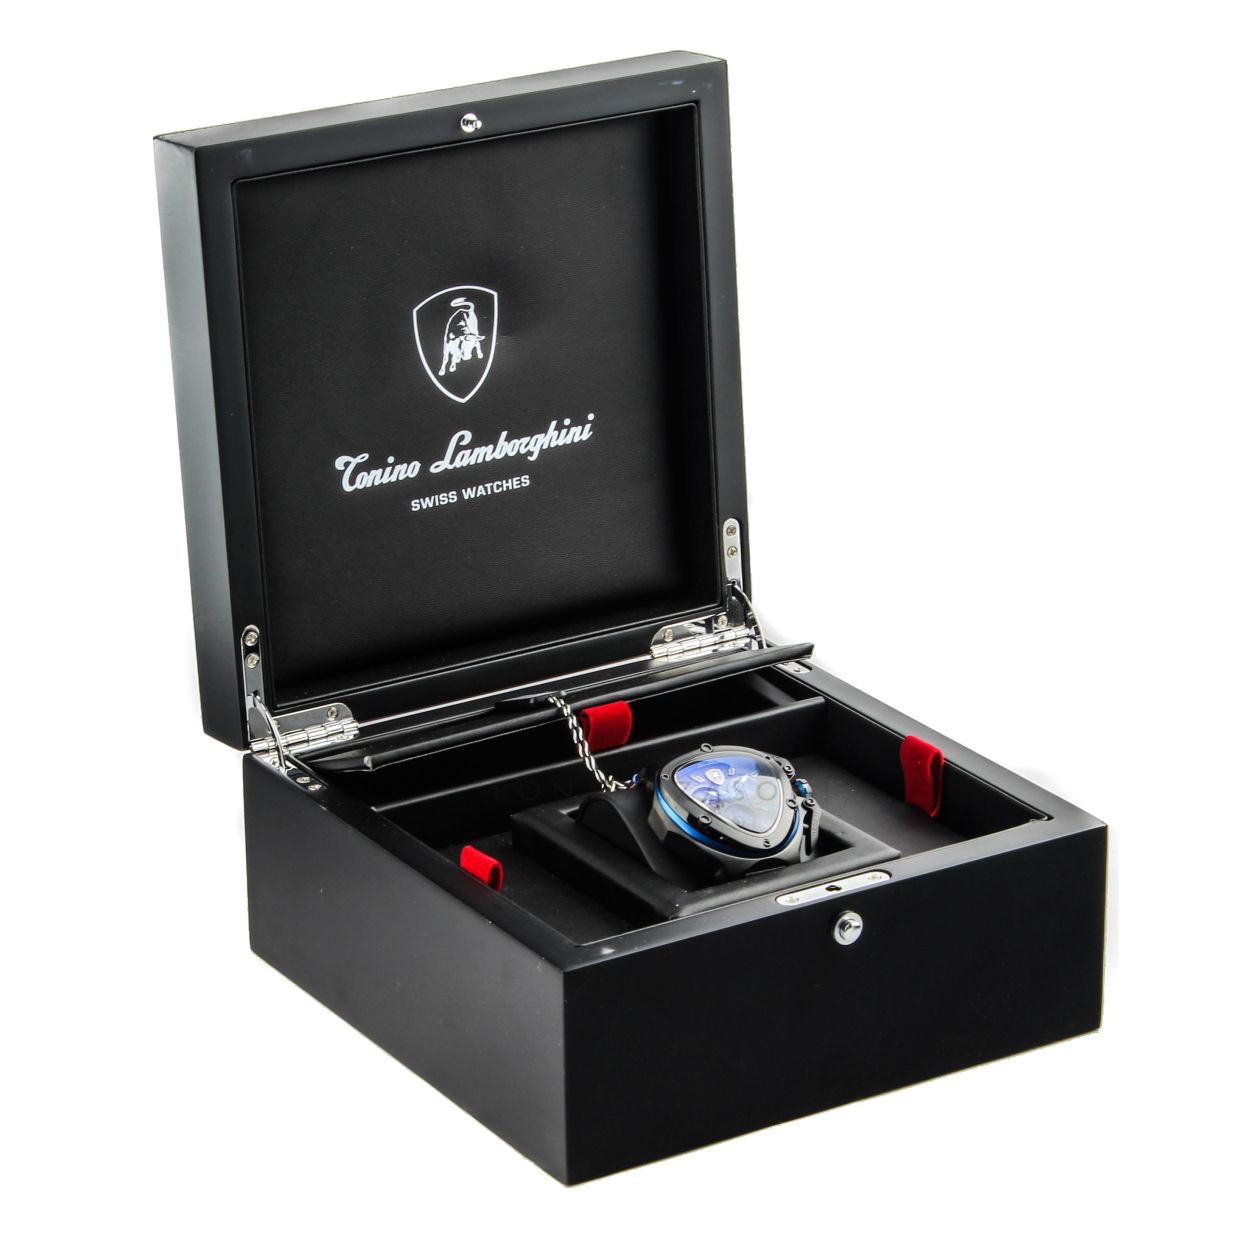 Zegarek męski Tonino Lamborghini T9XC Spyder + Dodatkowy pasek